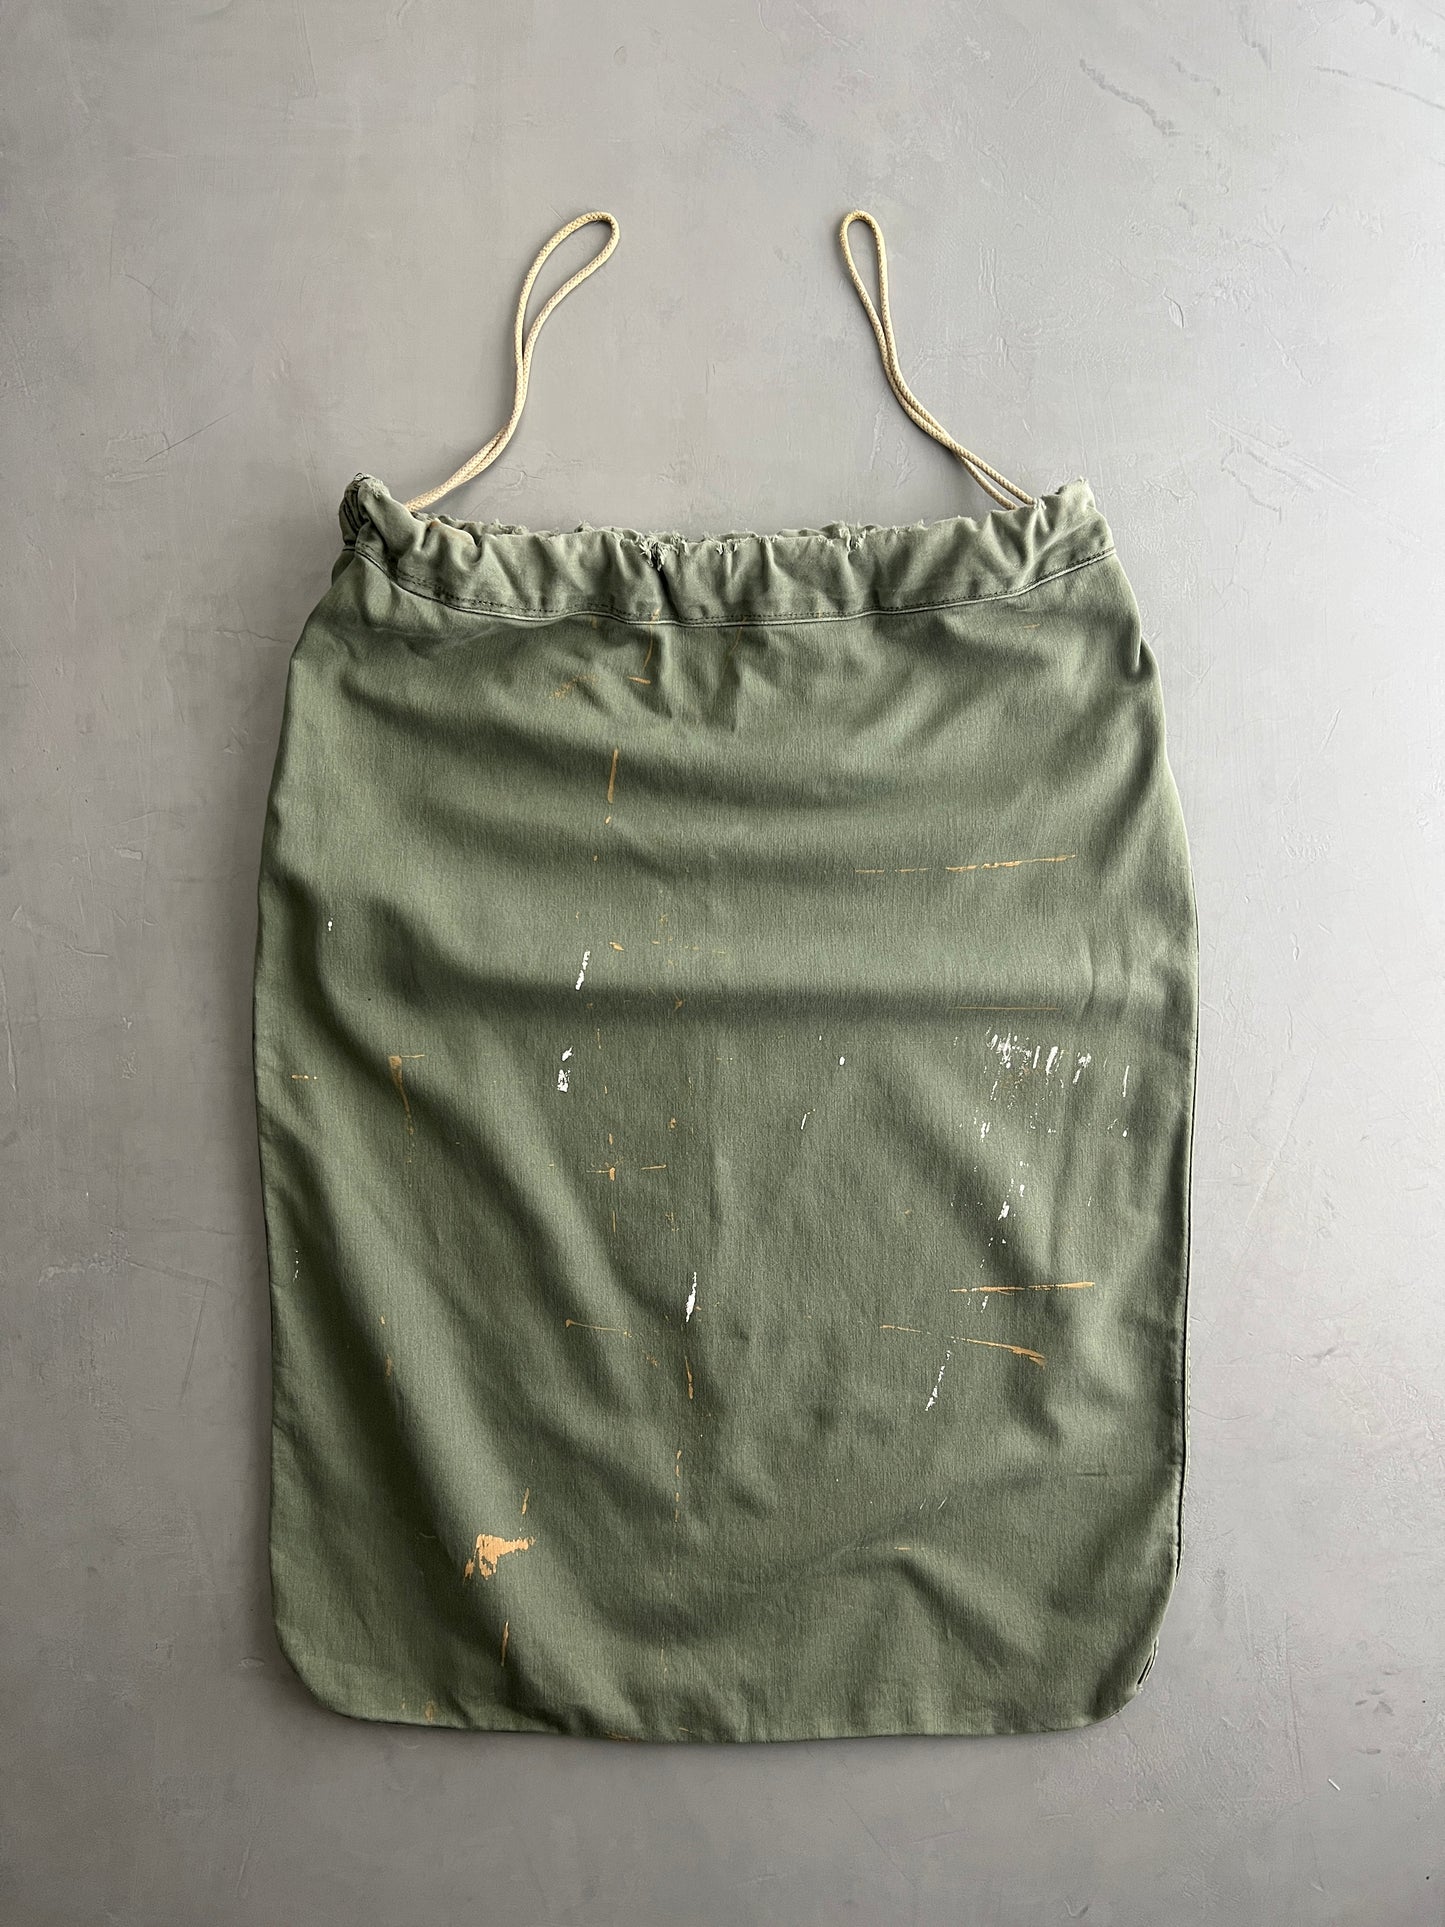 Sun-faded U.S.M.C. Laundry Bag